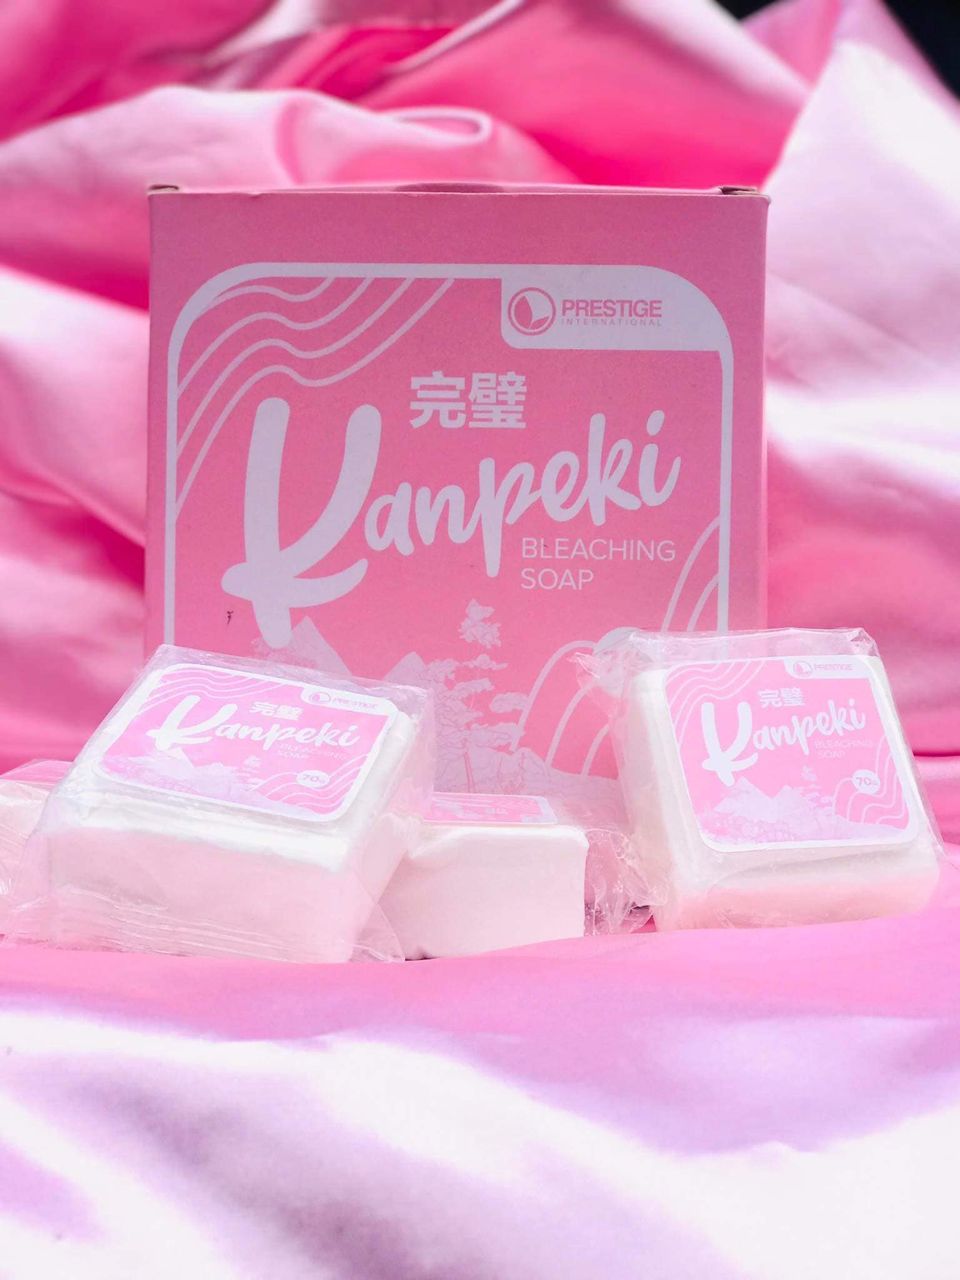 Prestige International Kanpeki Bleaching Soap 70g